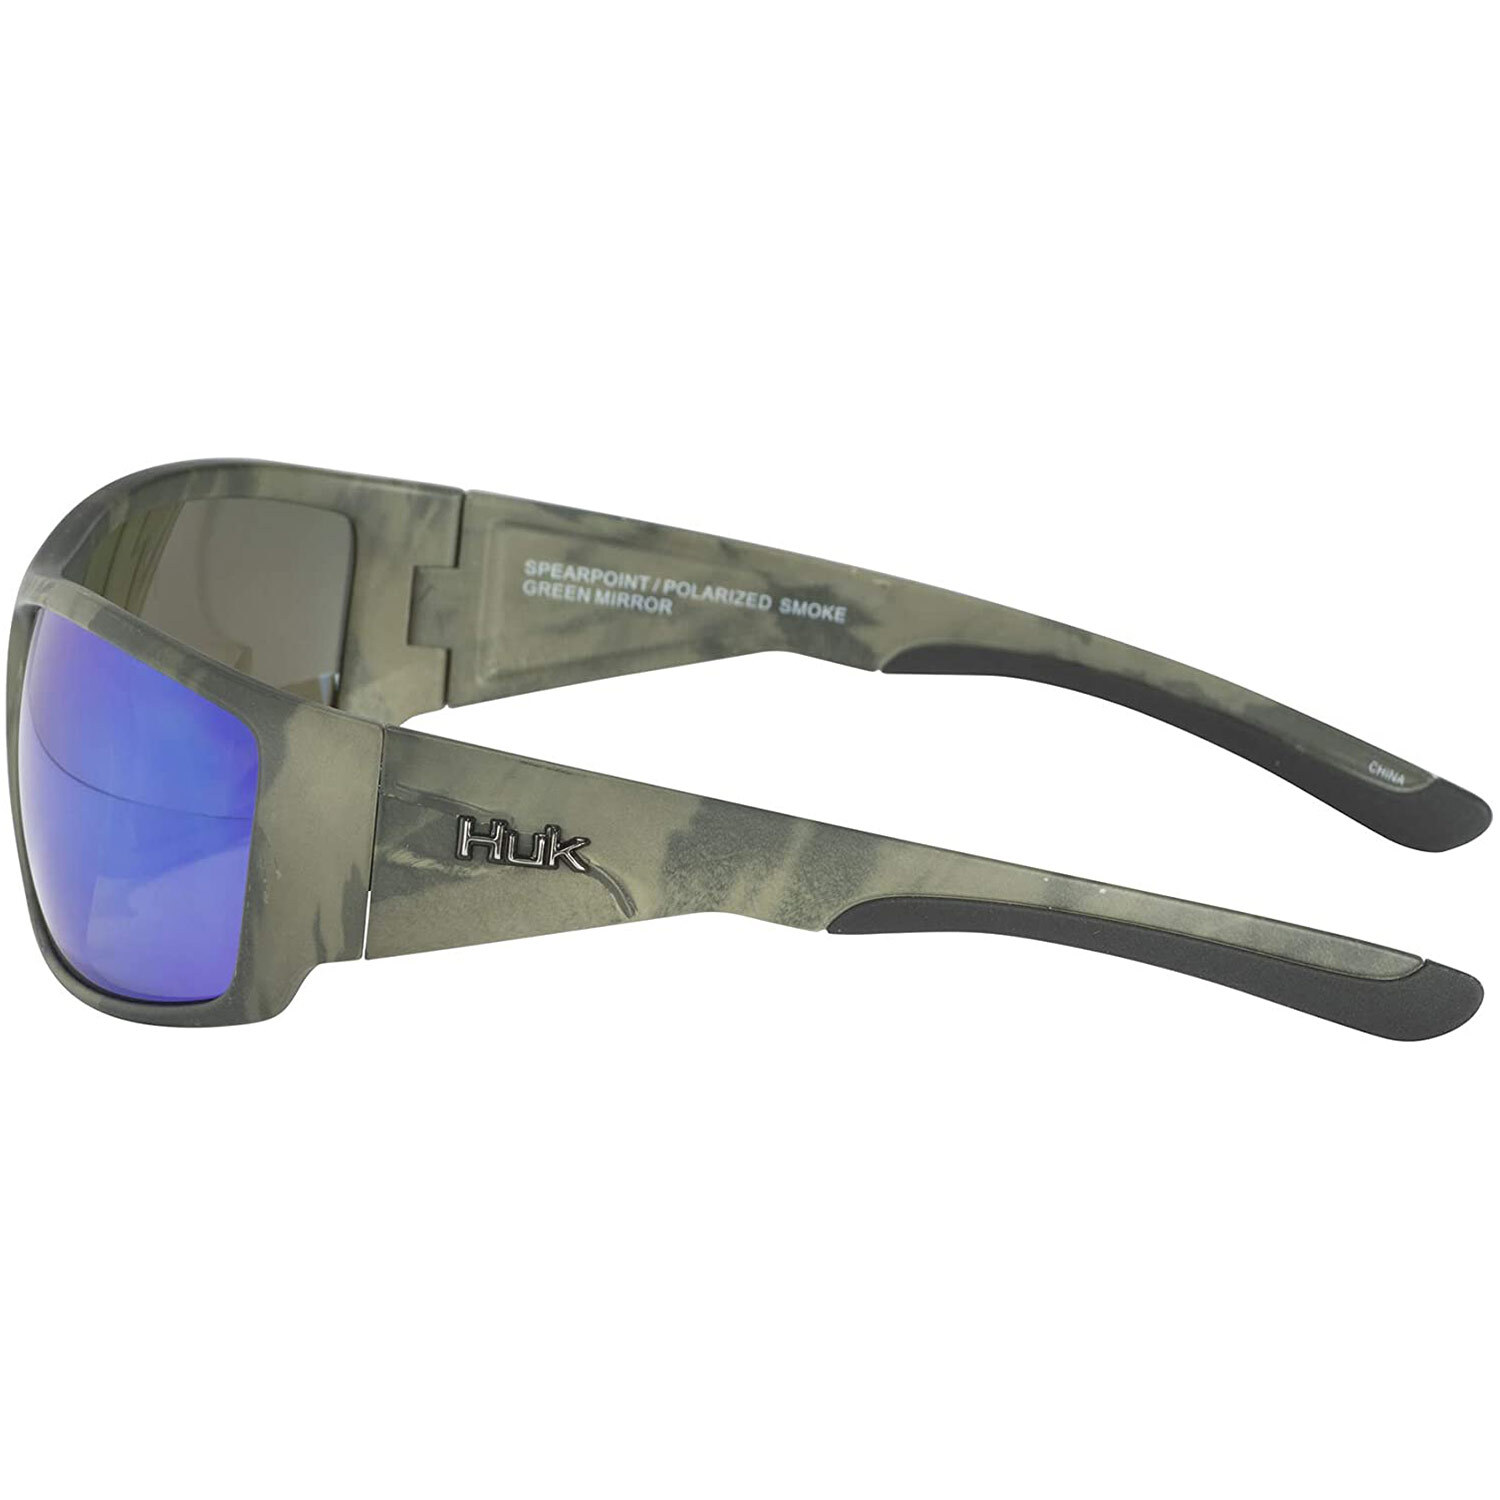 Spearpoint Polarized Sunglasses | West Marine